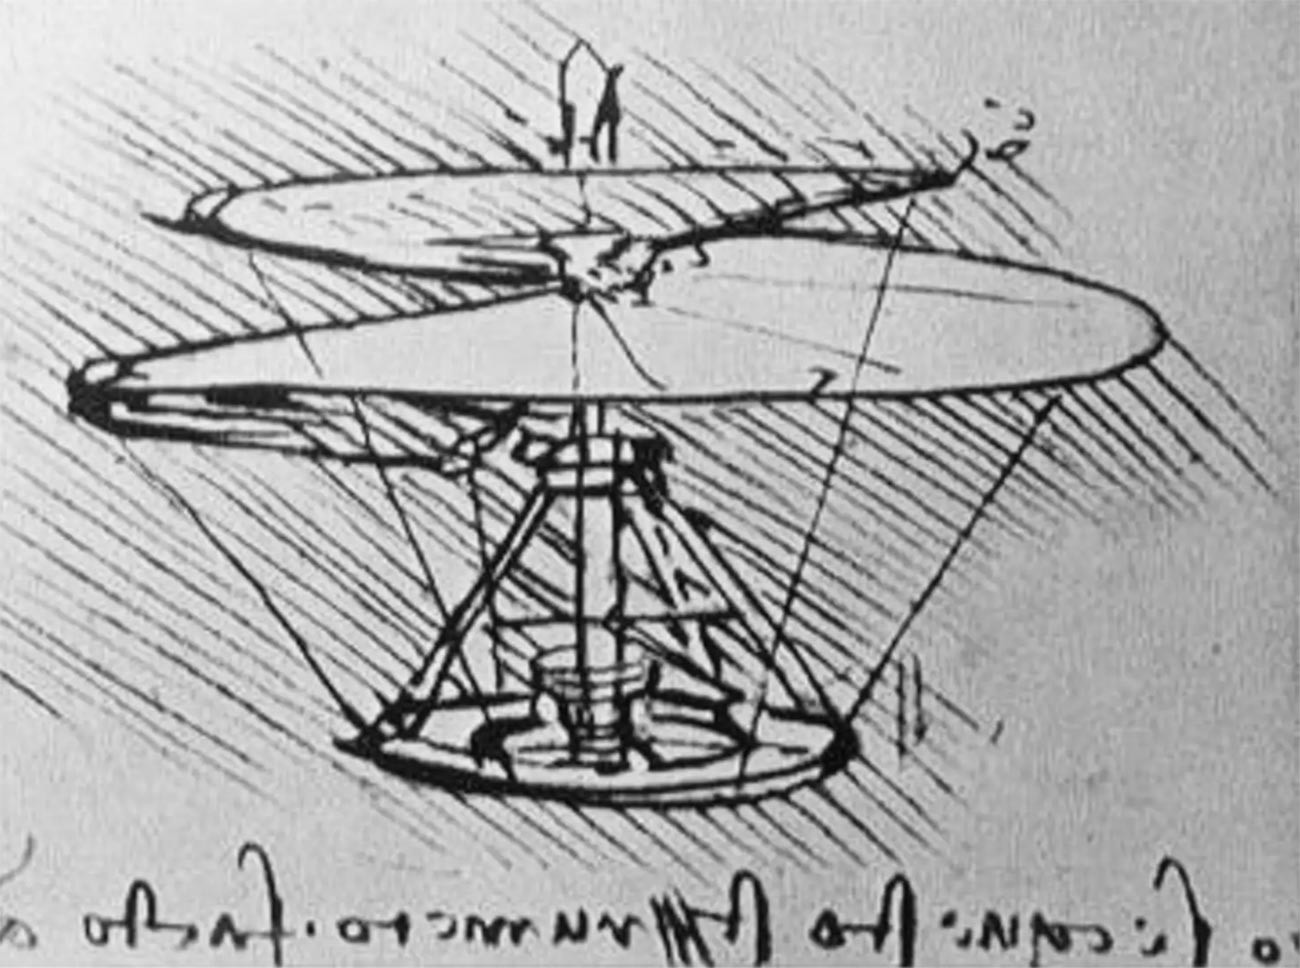 Leonardo da Vinci's prototype of a helicopter.